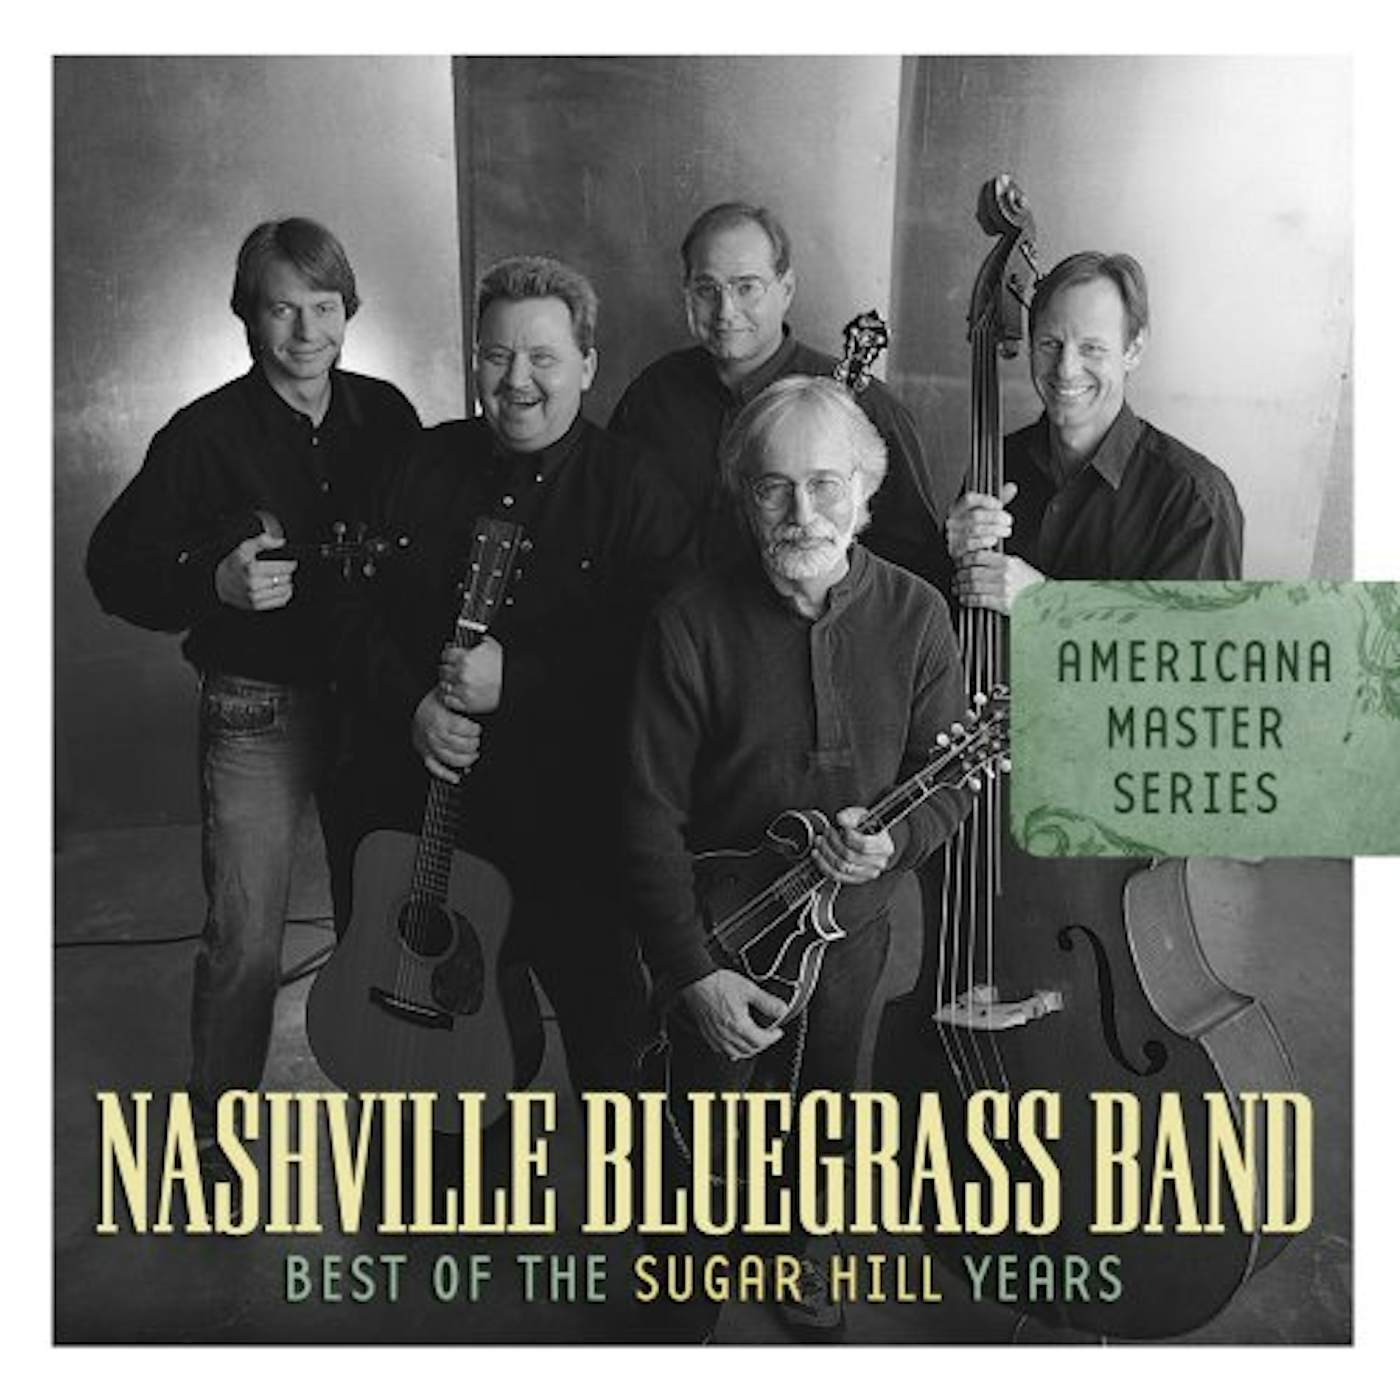 Nashville Bluegrass Band BEST OF THE SUGAR HILL YEARS CD